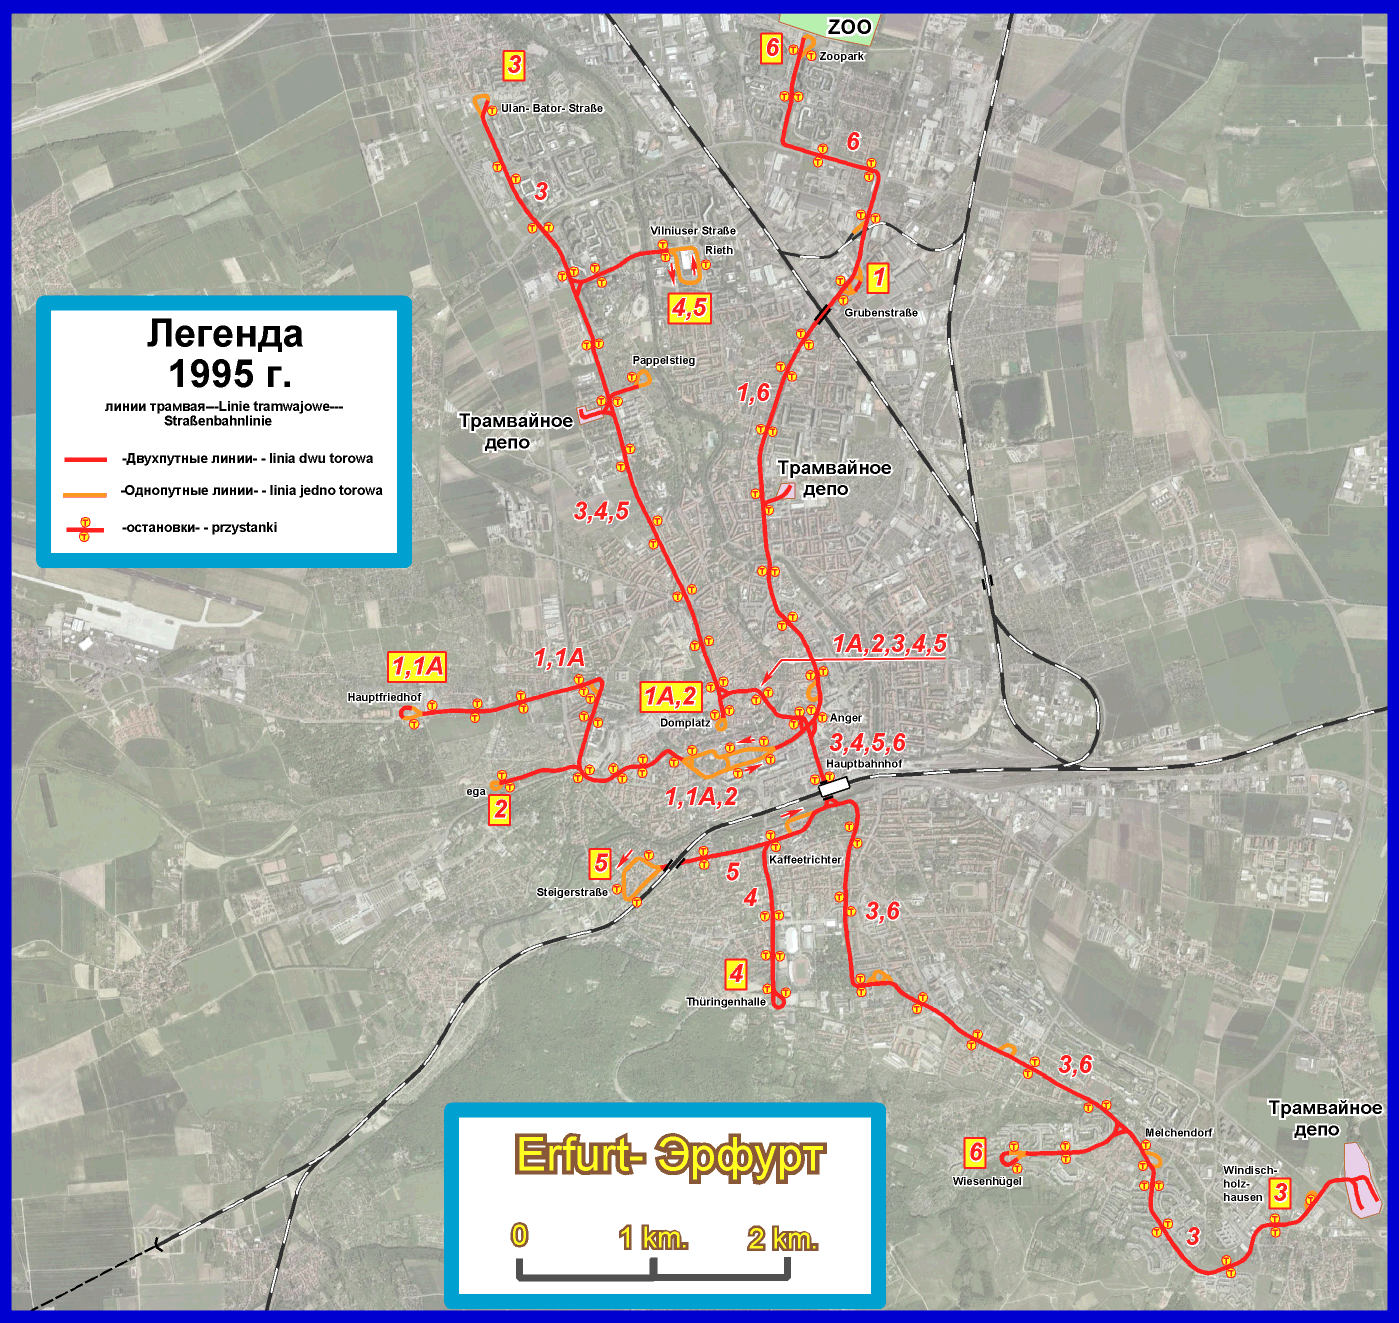 Erfurt — Maps